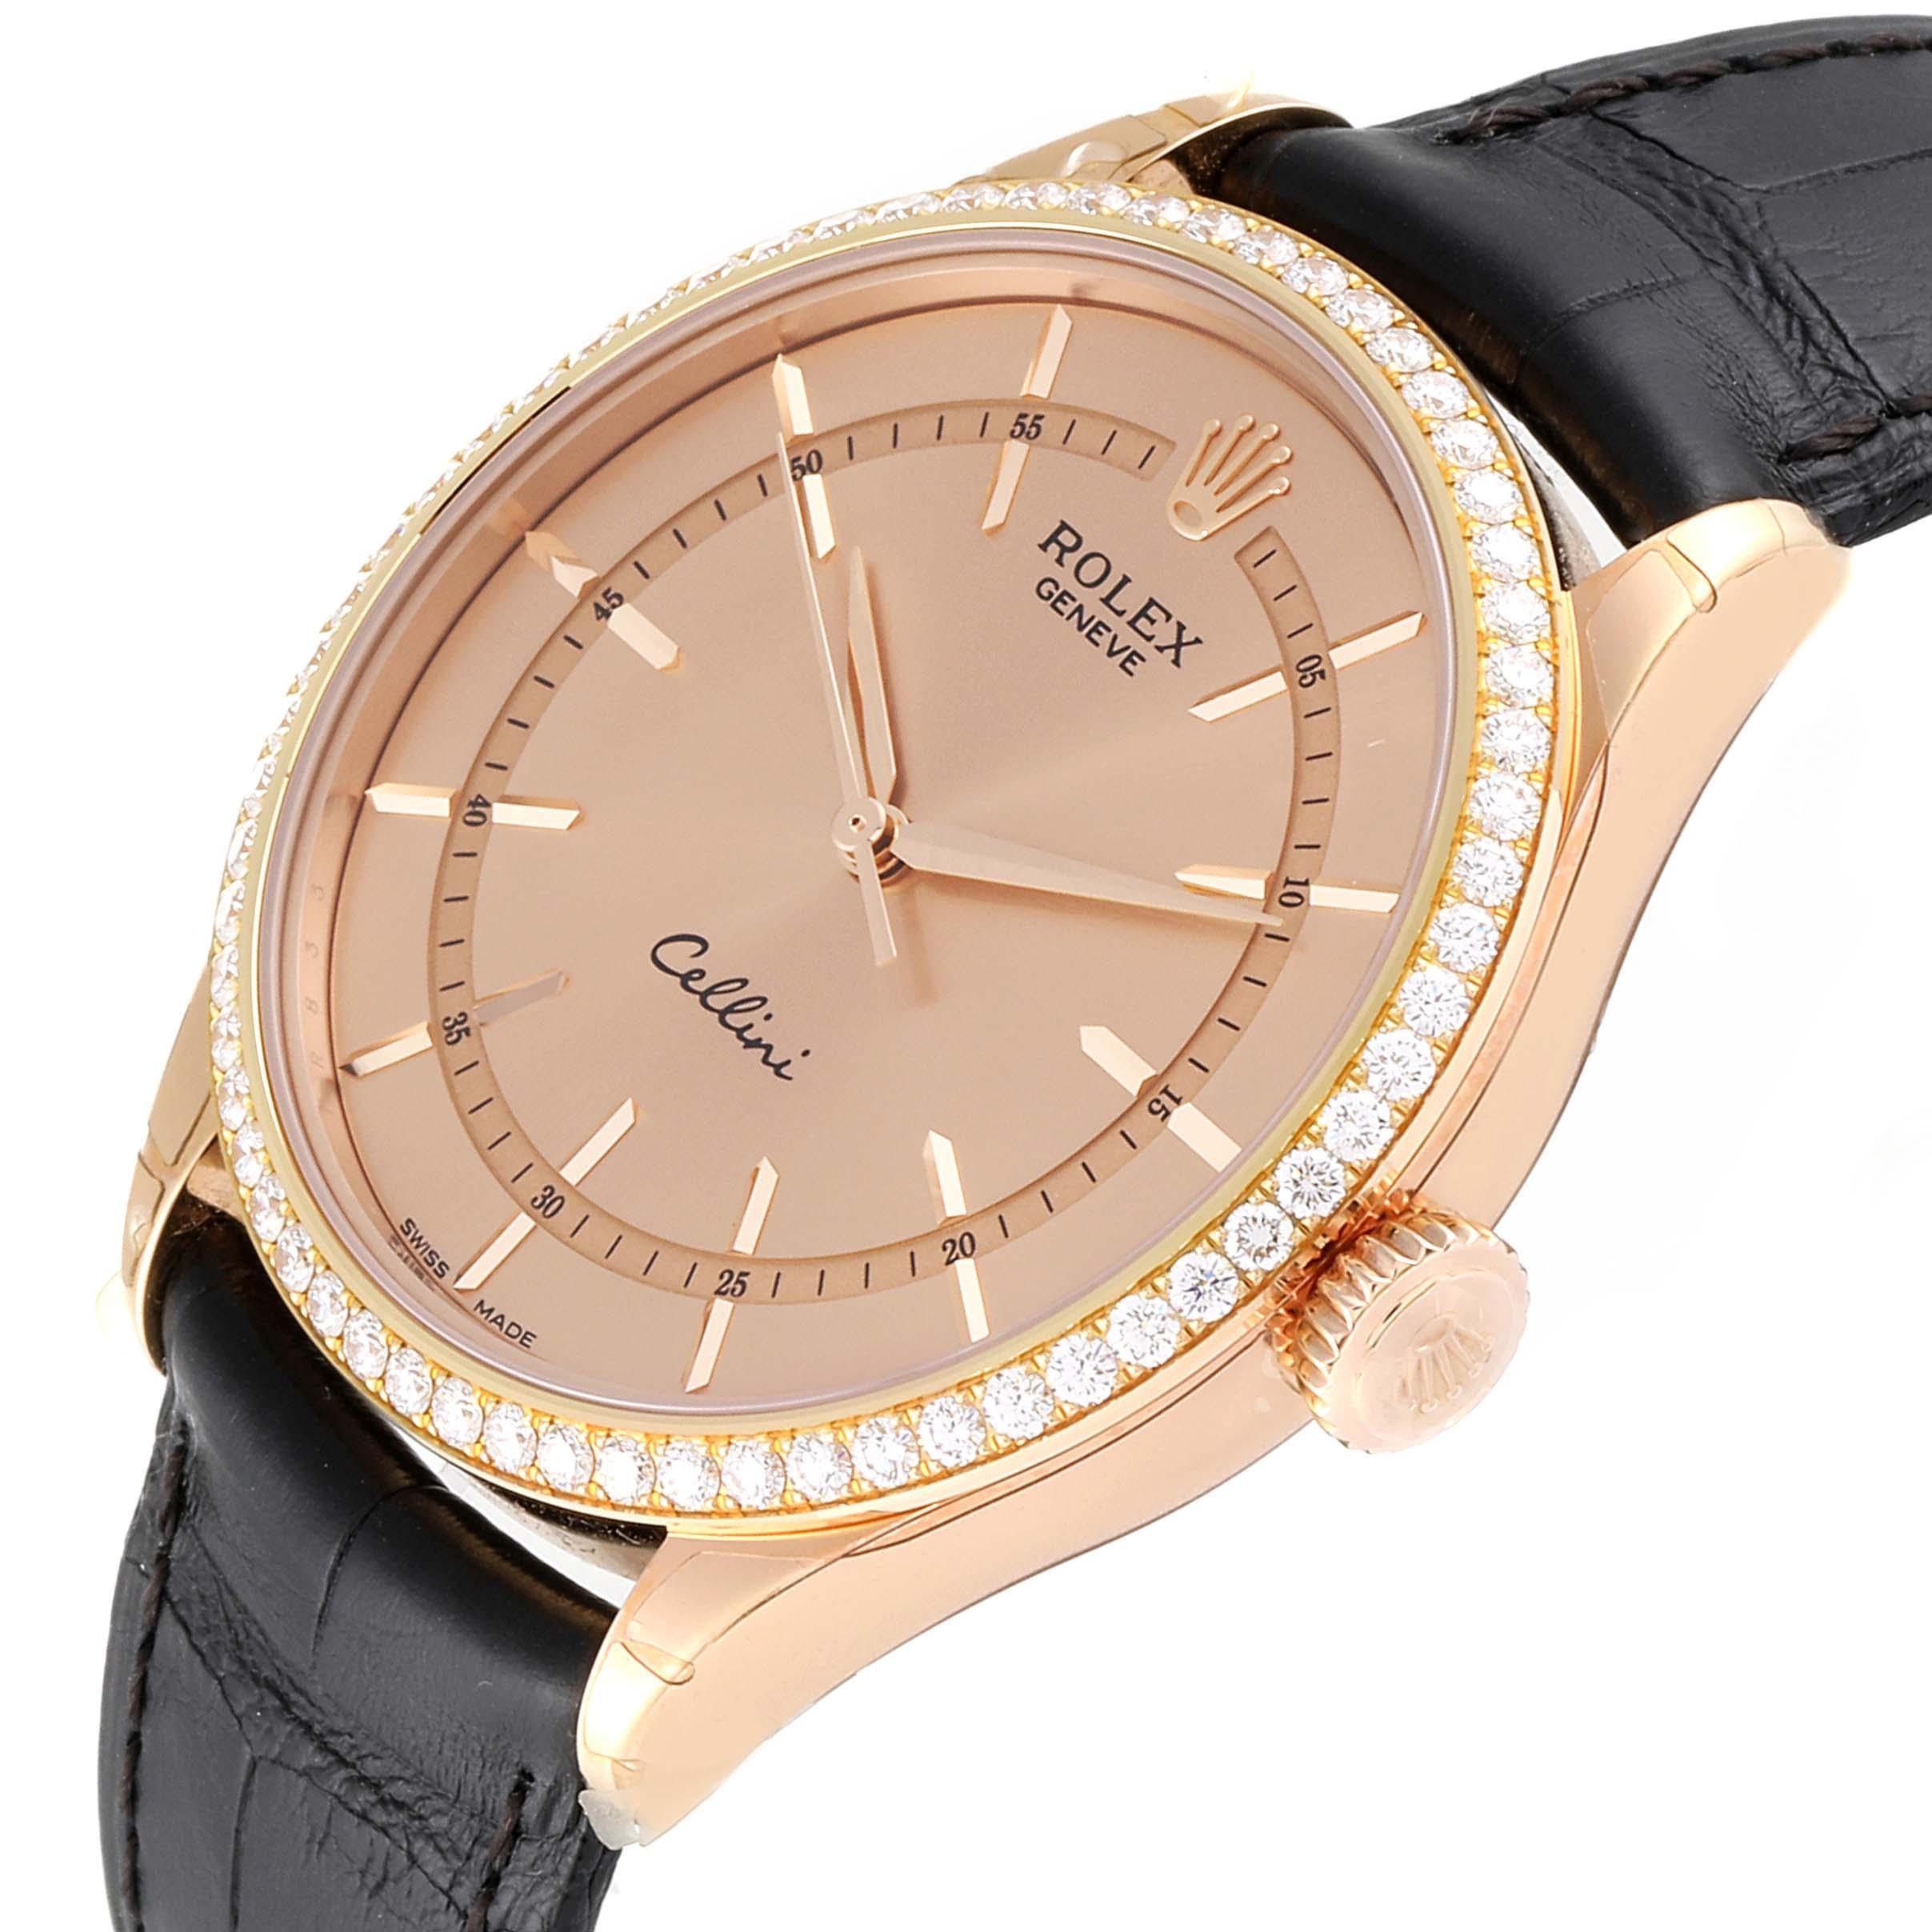 Rolex Cellini Everose Gold Automatic Diamond Men's Watch 50705 Unworn For Sale 1